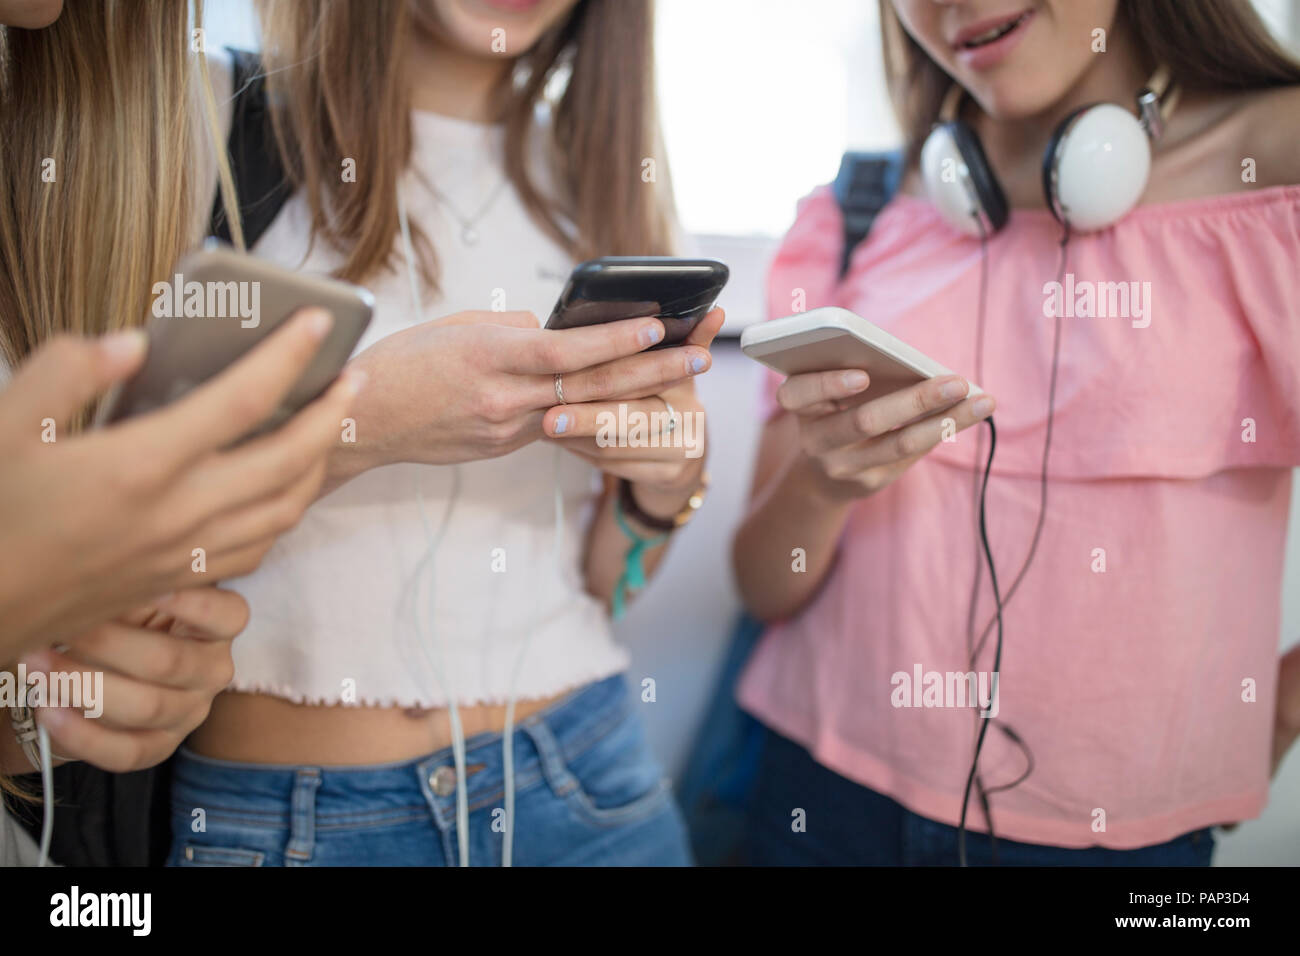 Teenage girls using cell phones in school Stock Photo